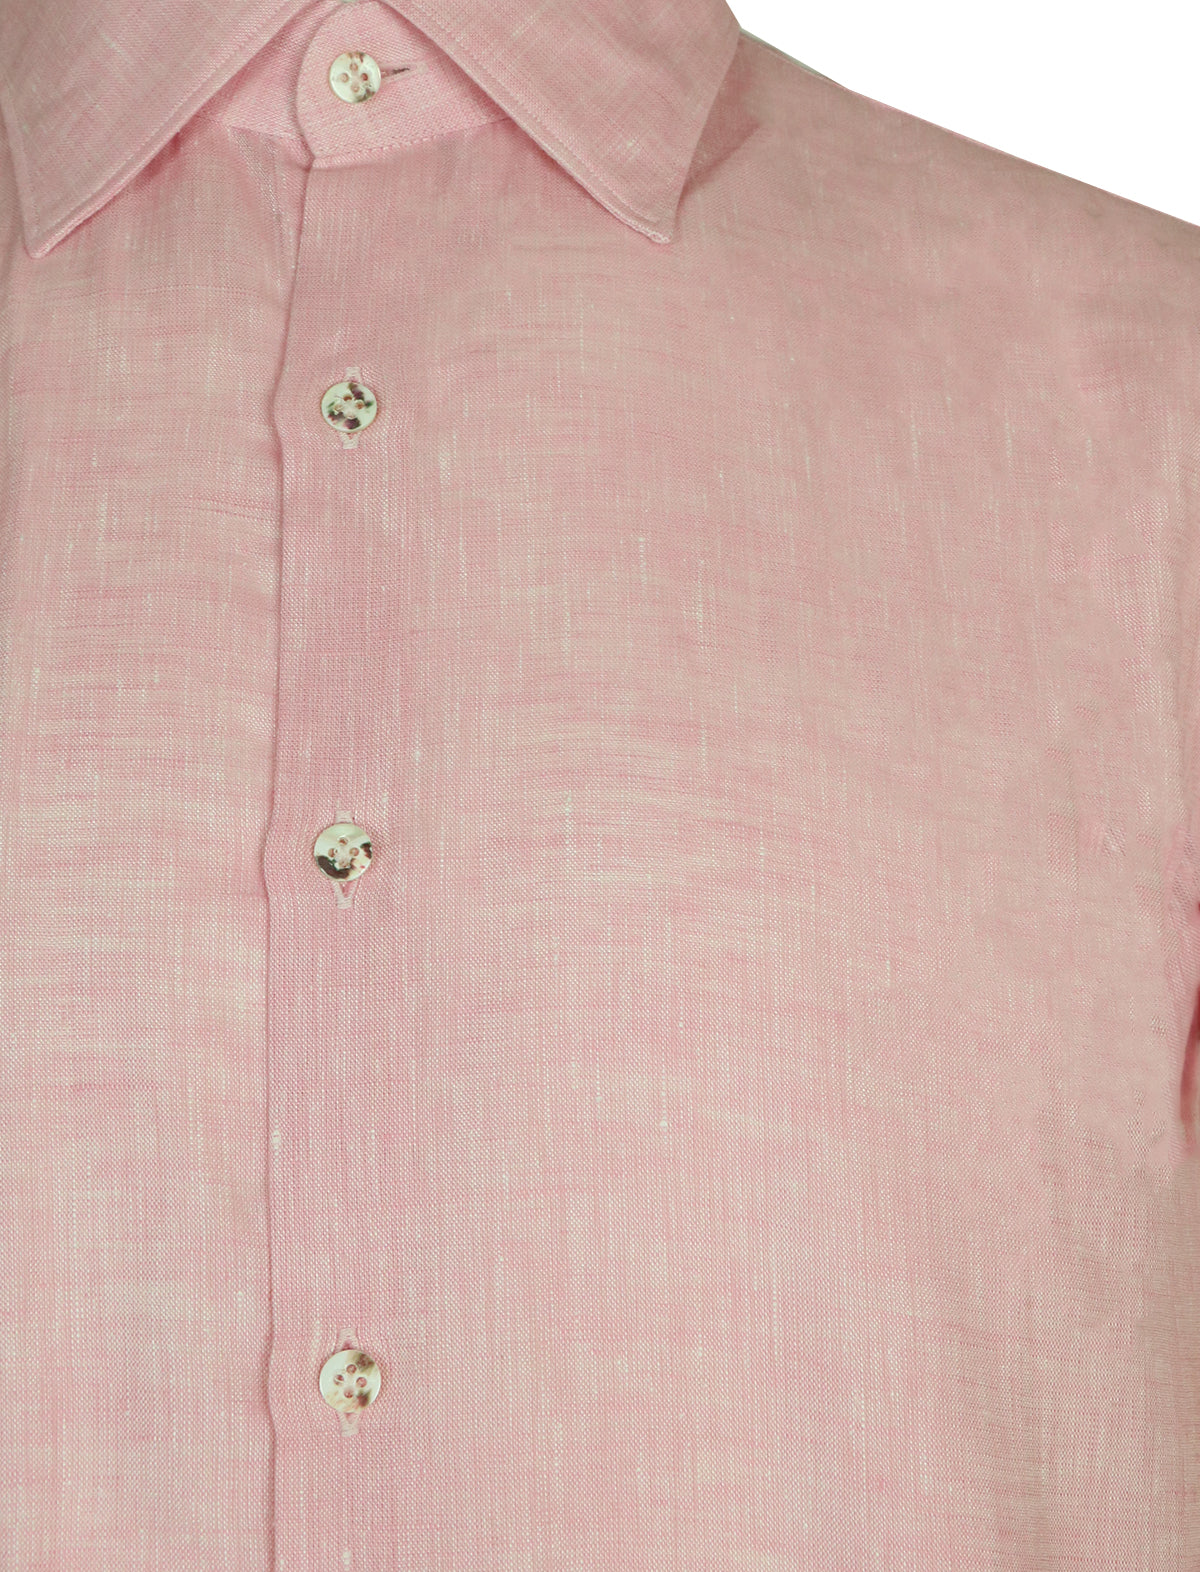 Gabriele Pasini Flax Shirt in Muted Pink